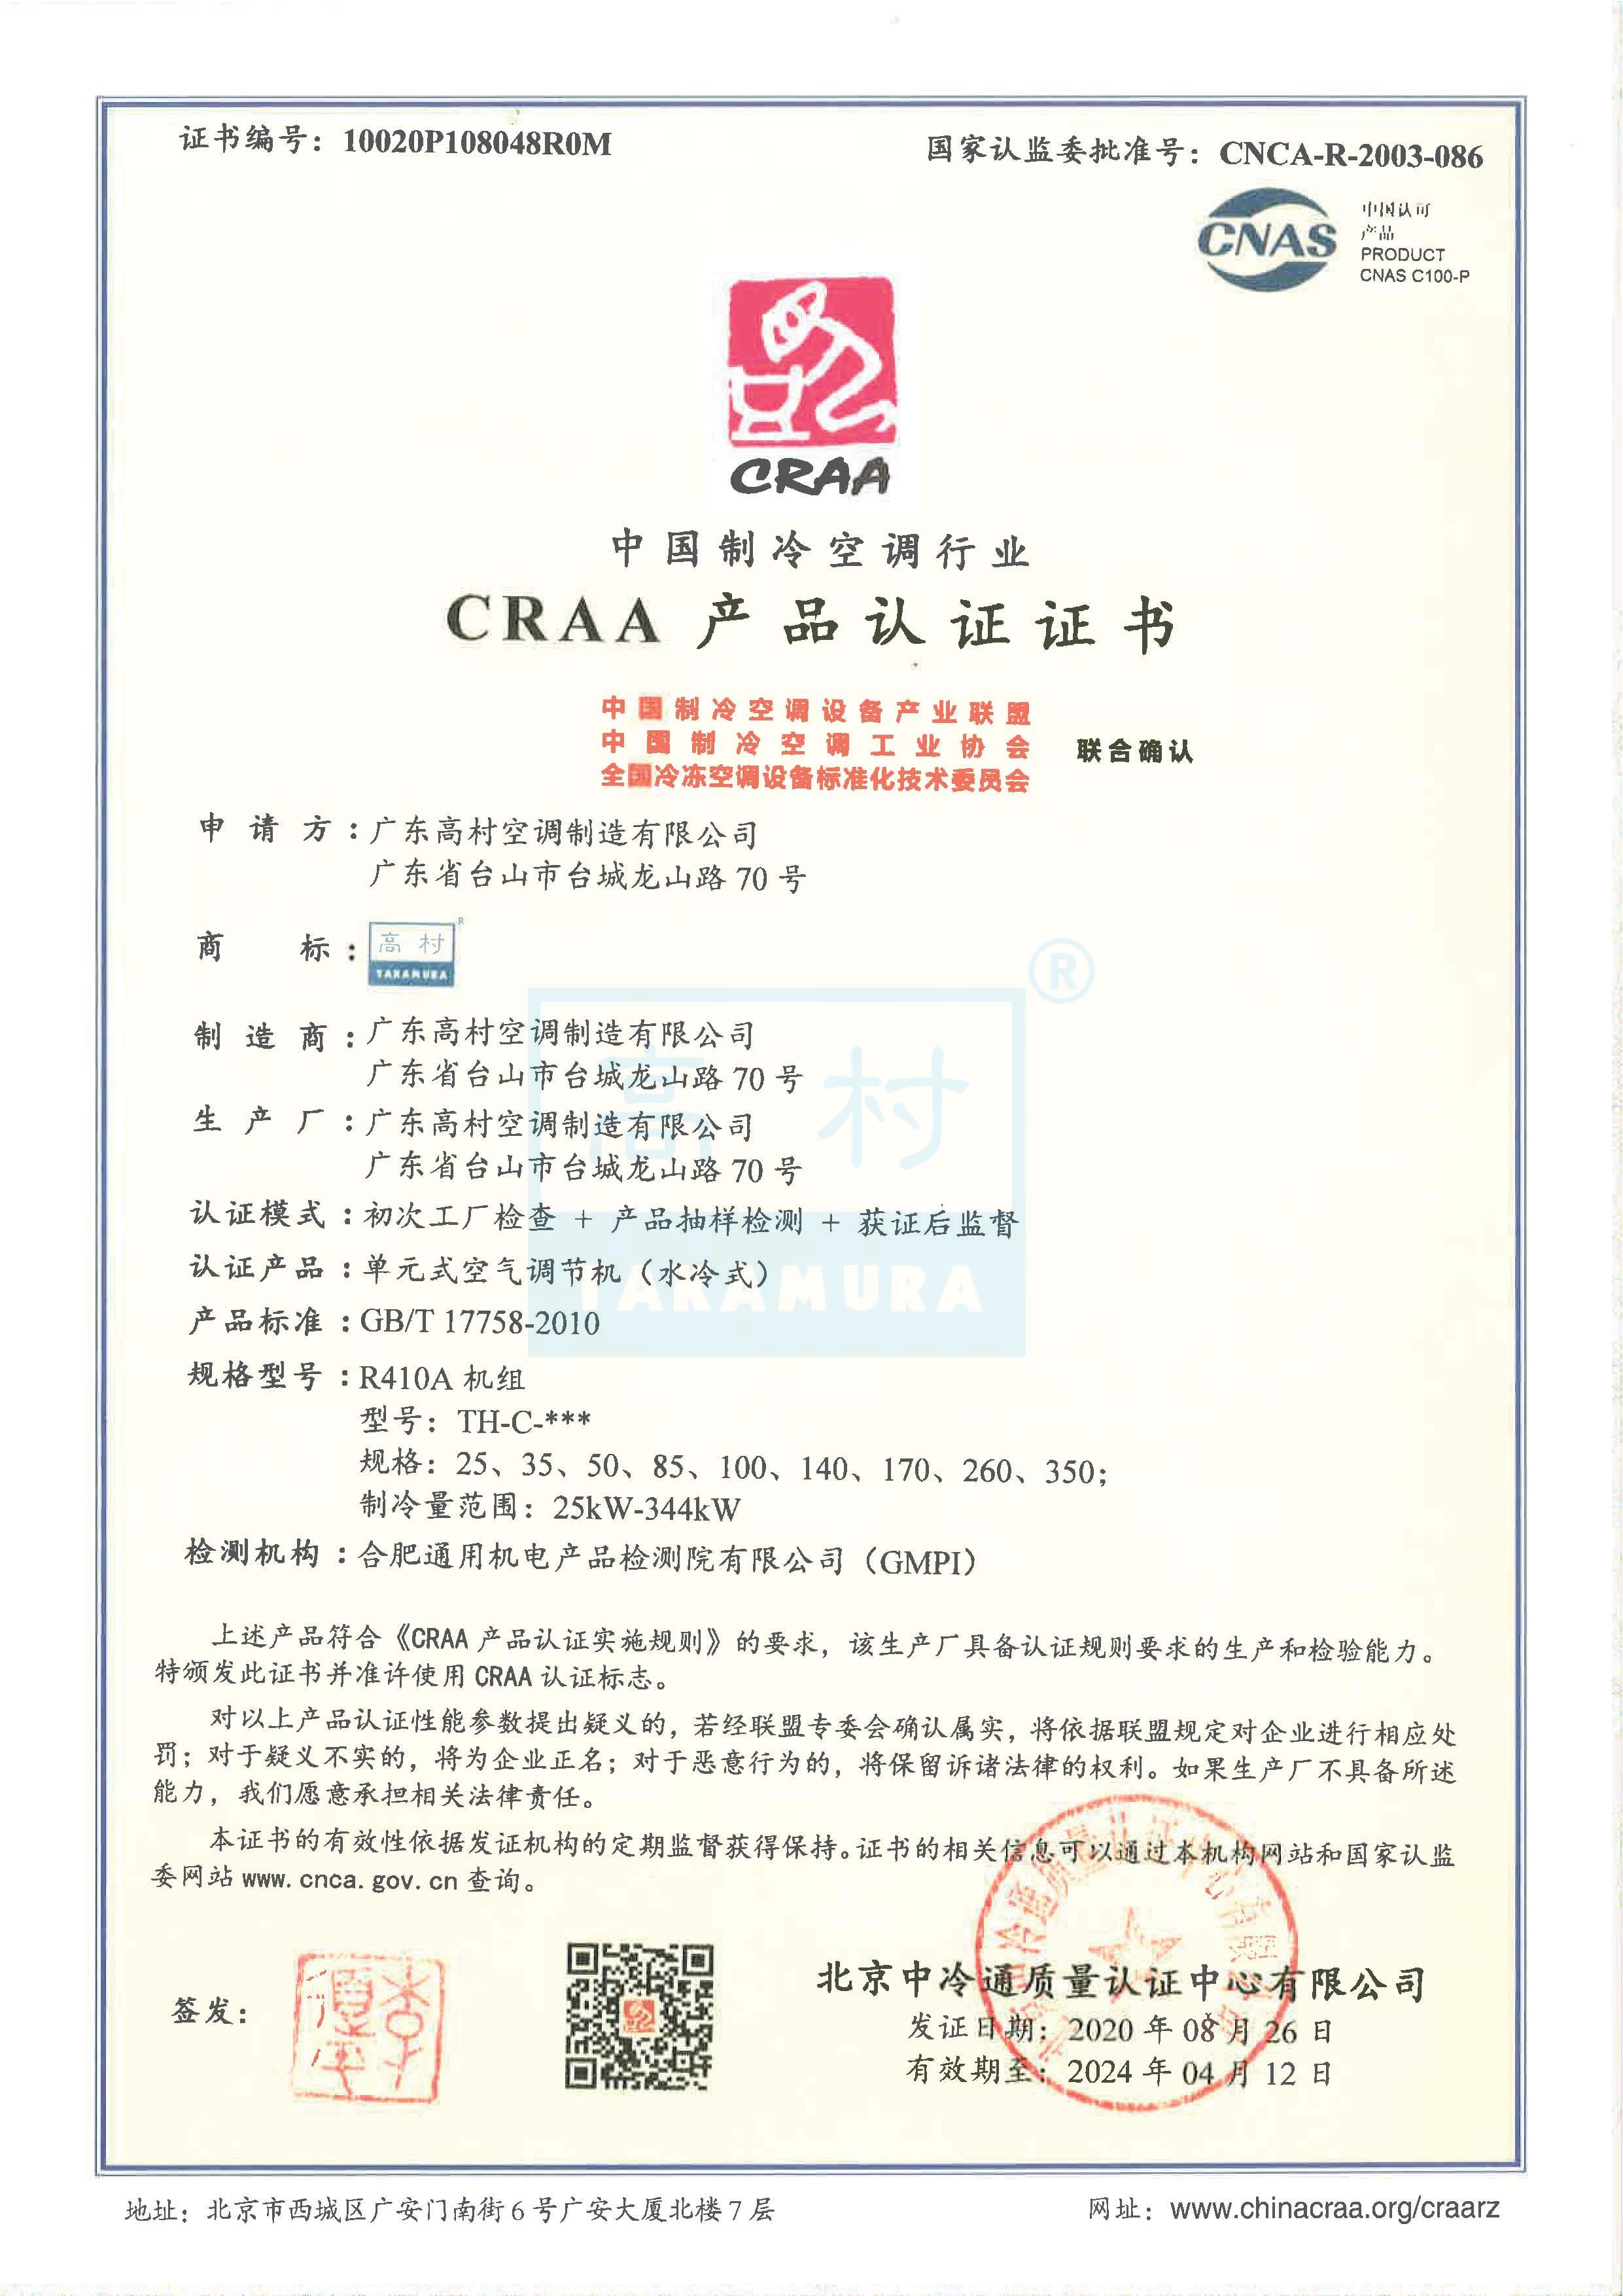 2020-2024 CRAA产品认证证书-TH-C系列